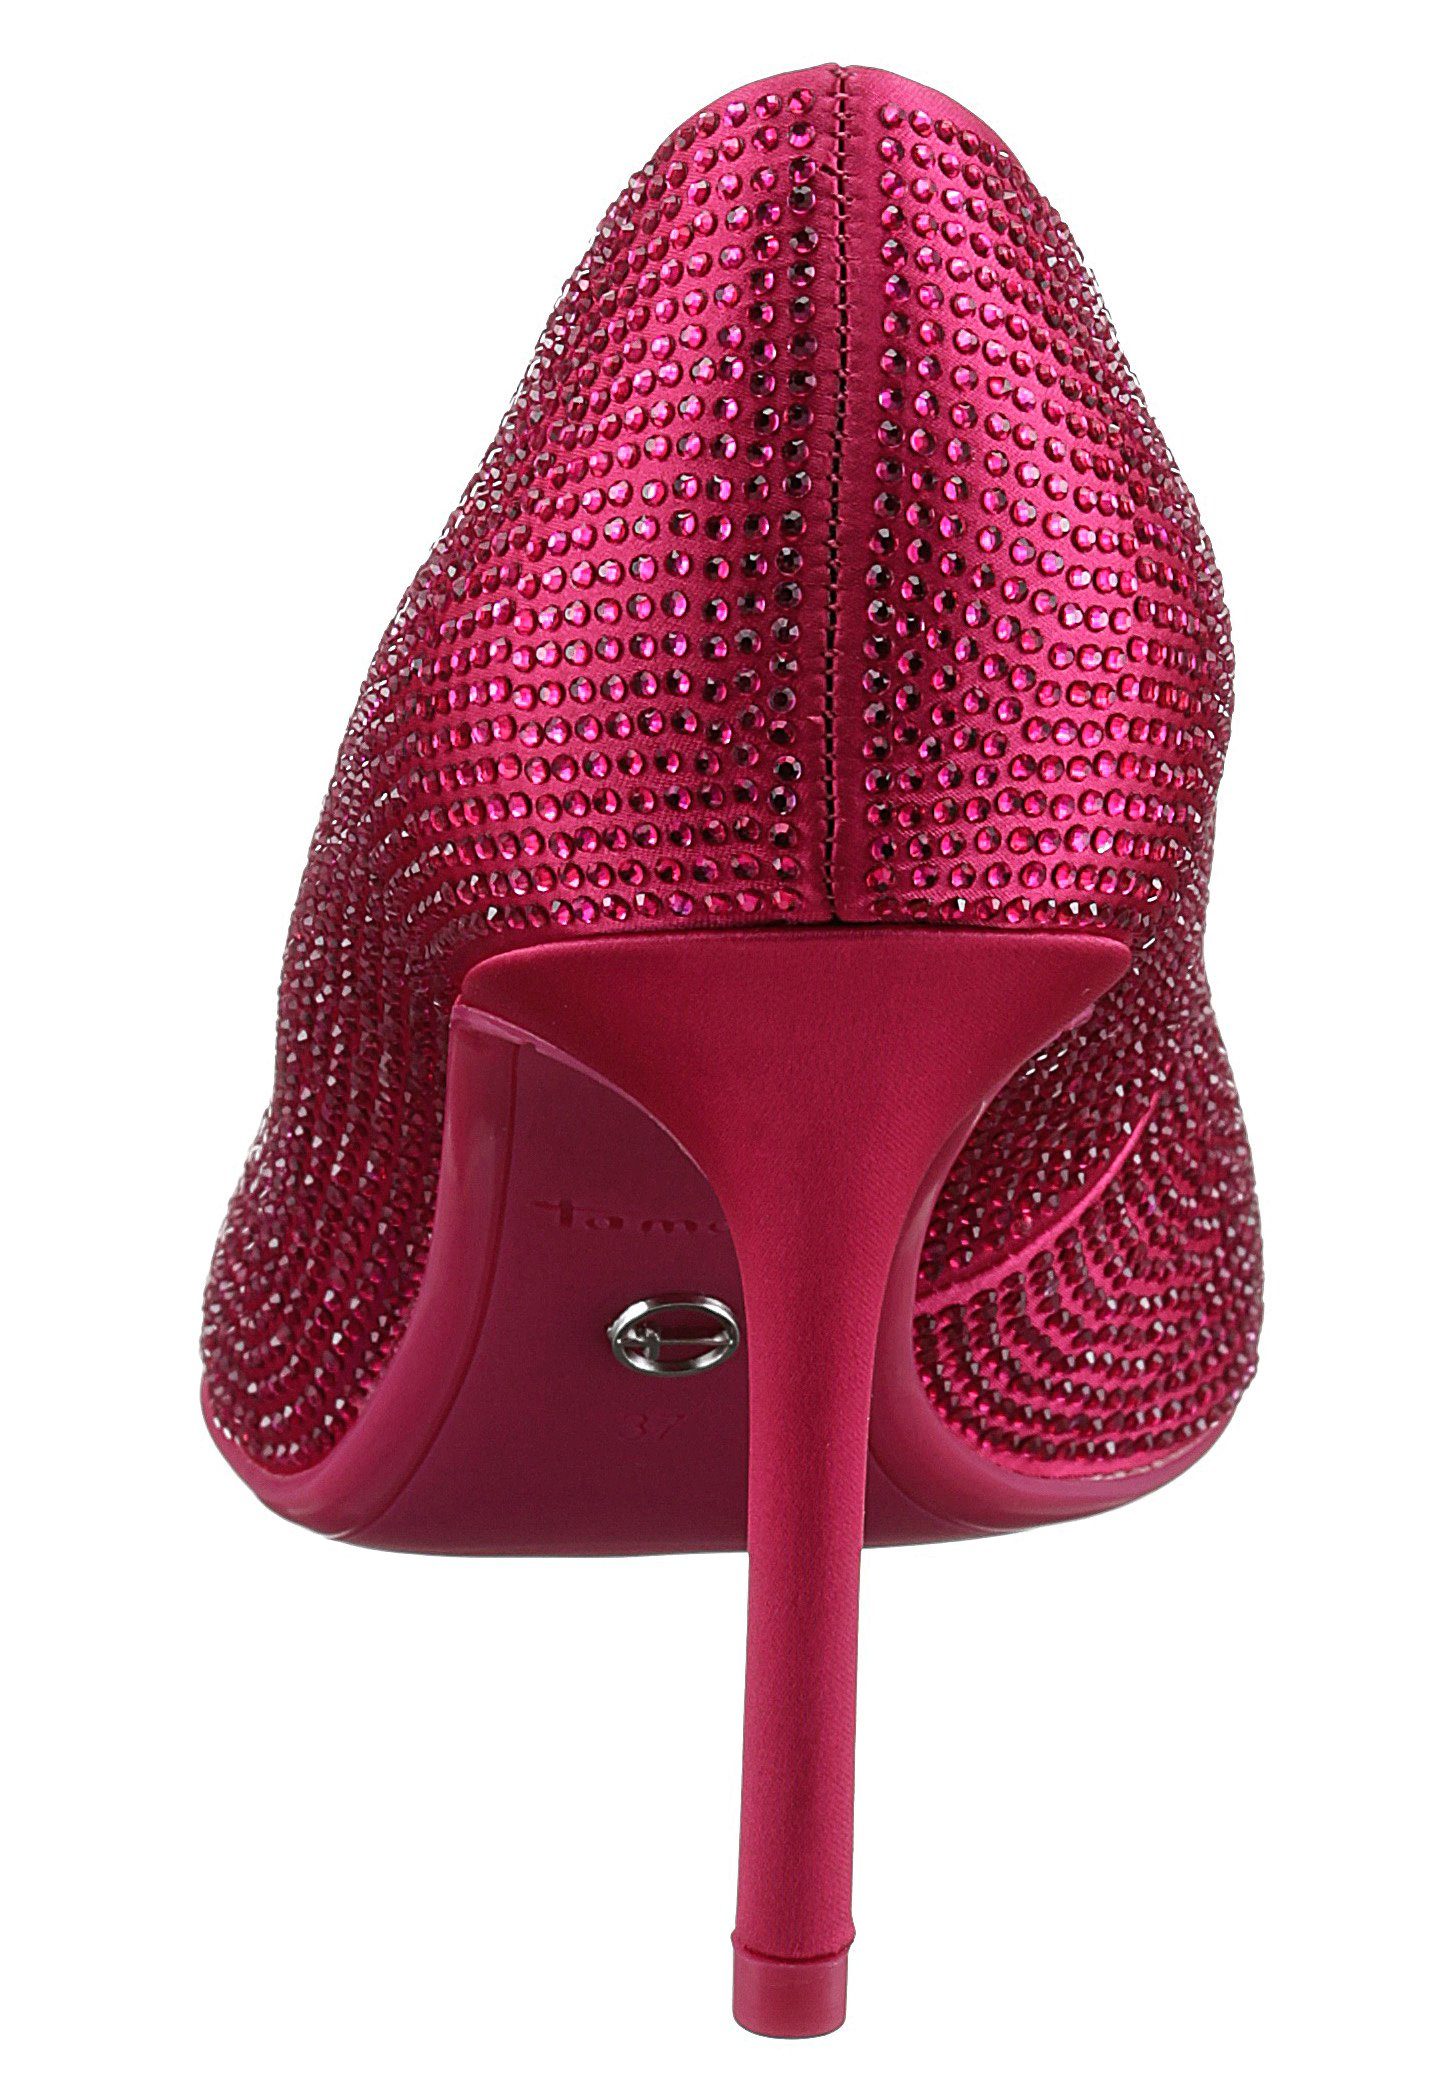 Tamaris spitzer Form in High-Heel-Pumps eleganter pink